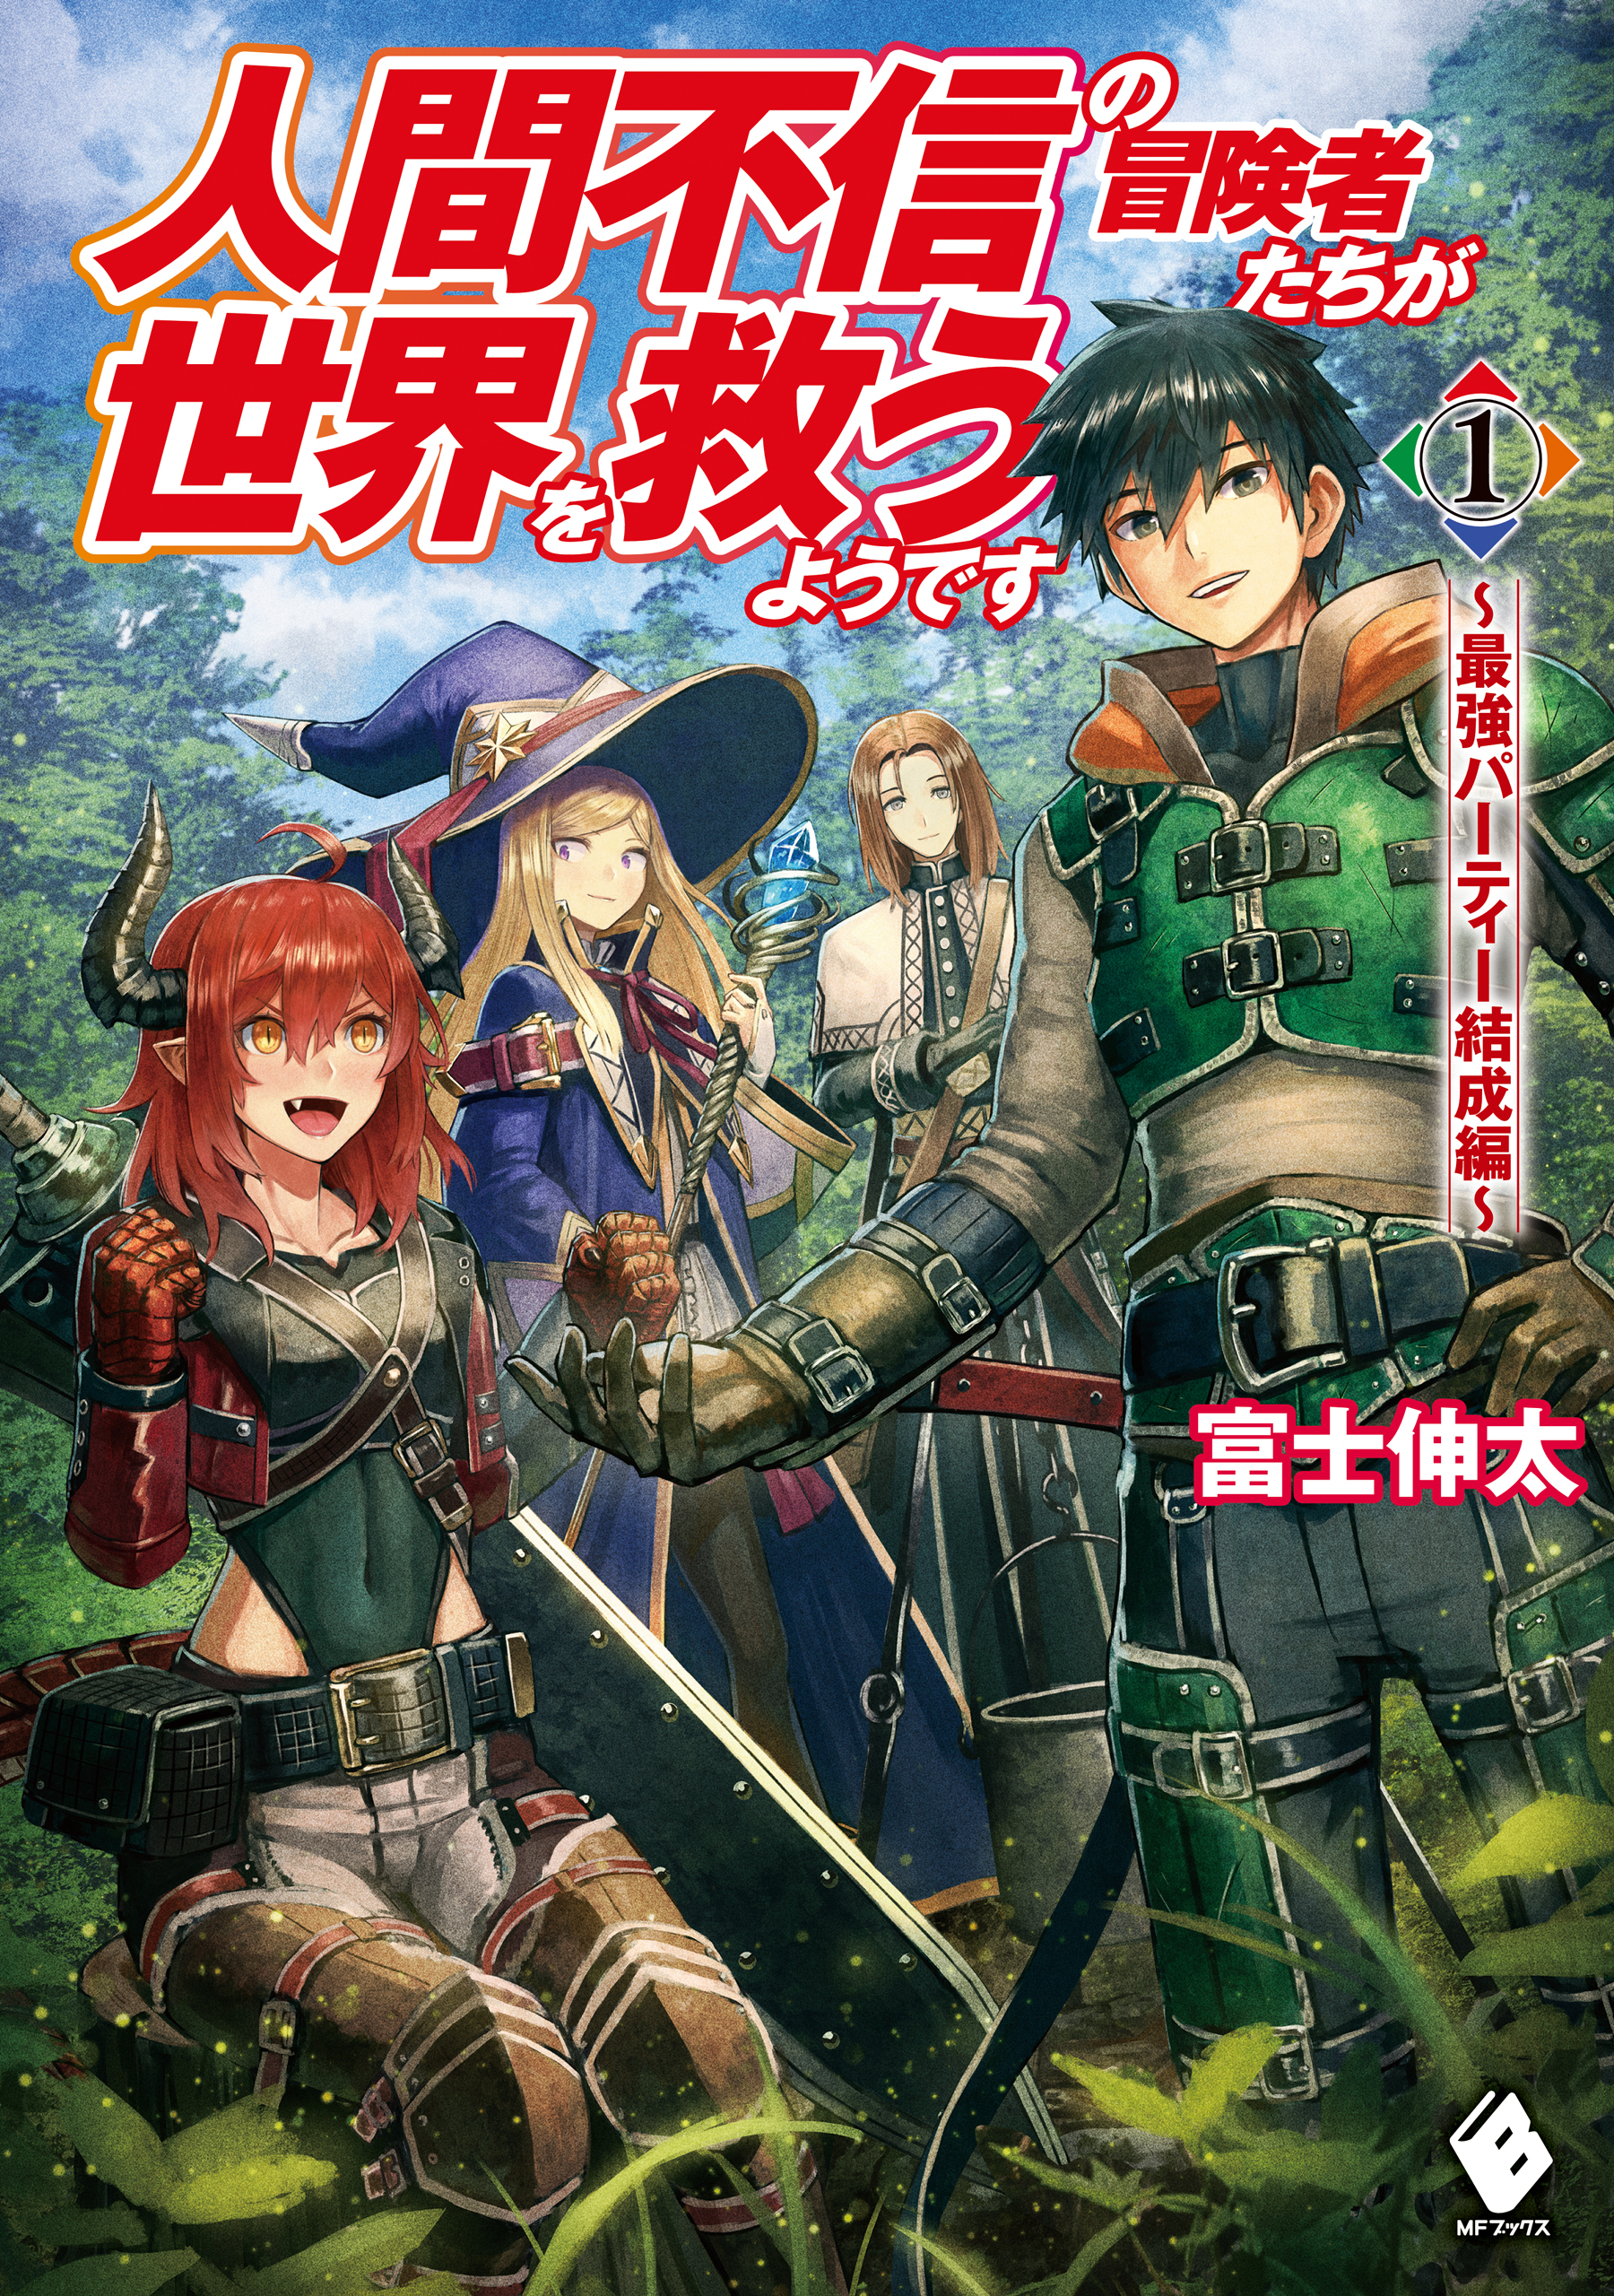 Read The Outcast Manga on Mangakakalot